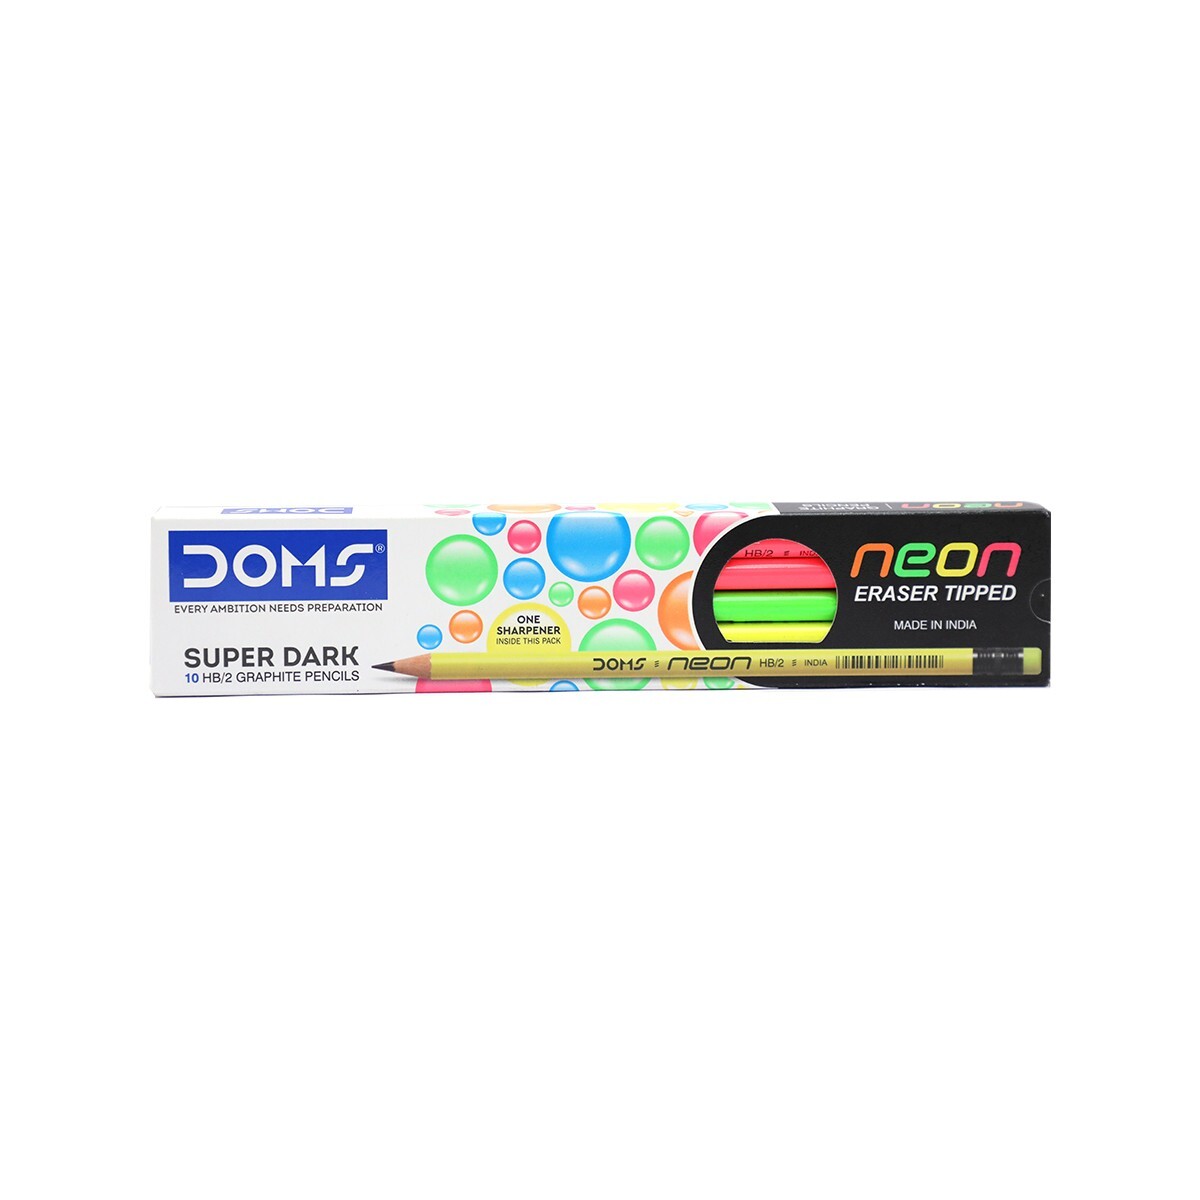 Doms Neon Eraser Tipped Pencils (10 Pencils Per Pack)